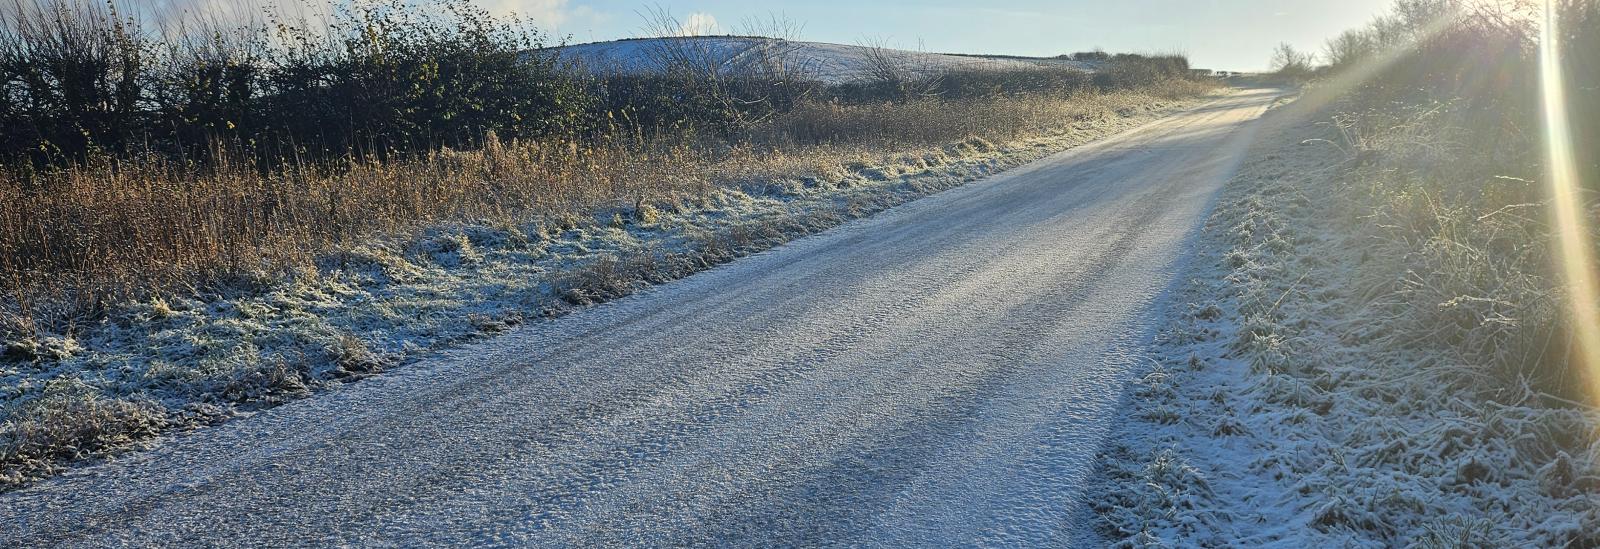 winter roads, frosty icy